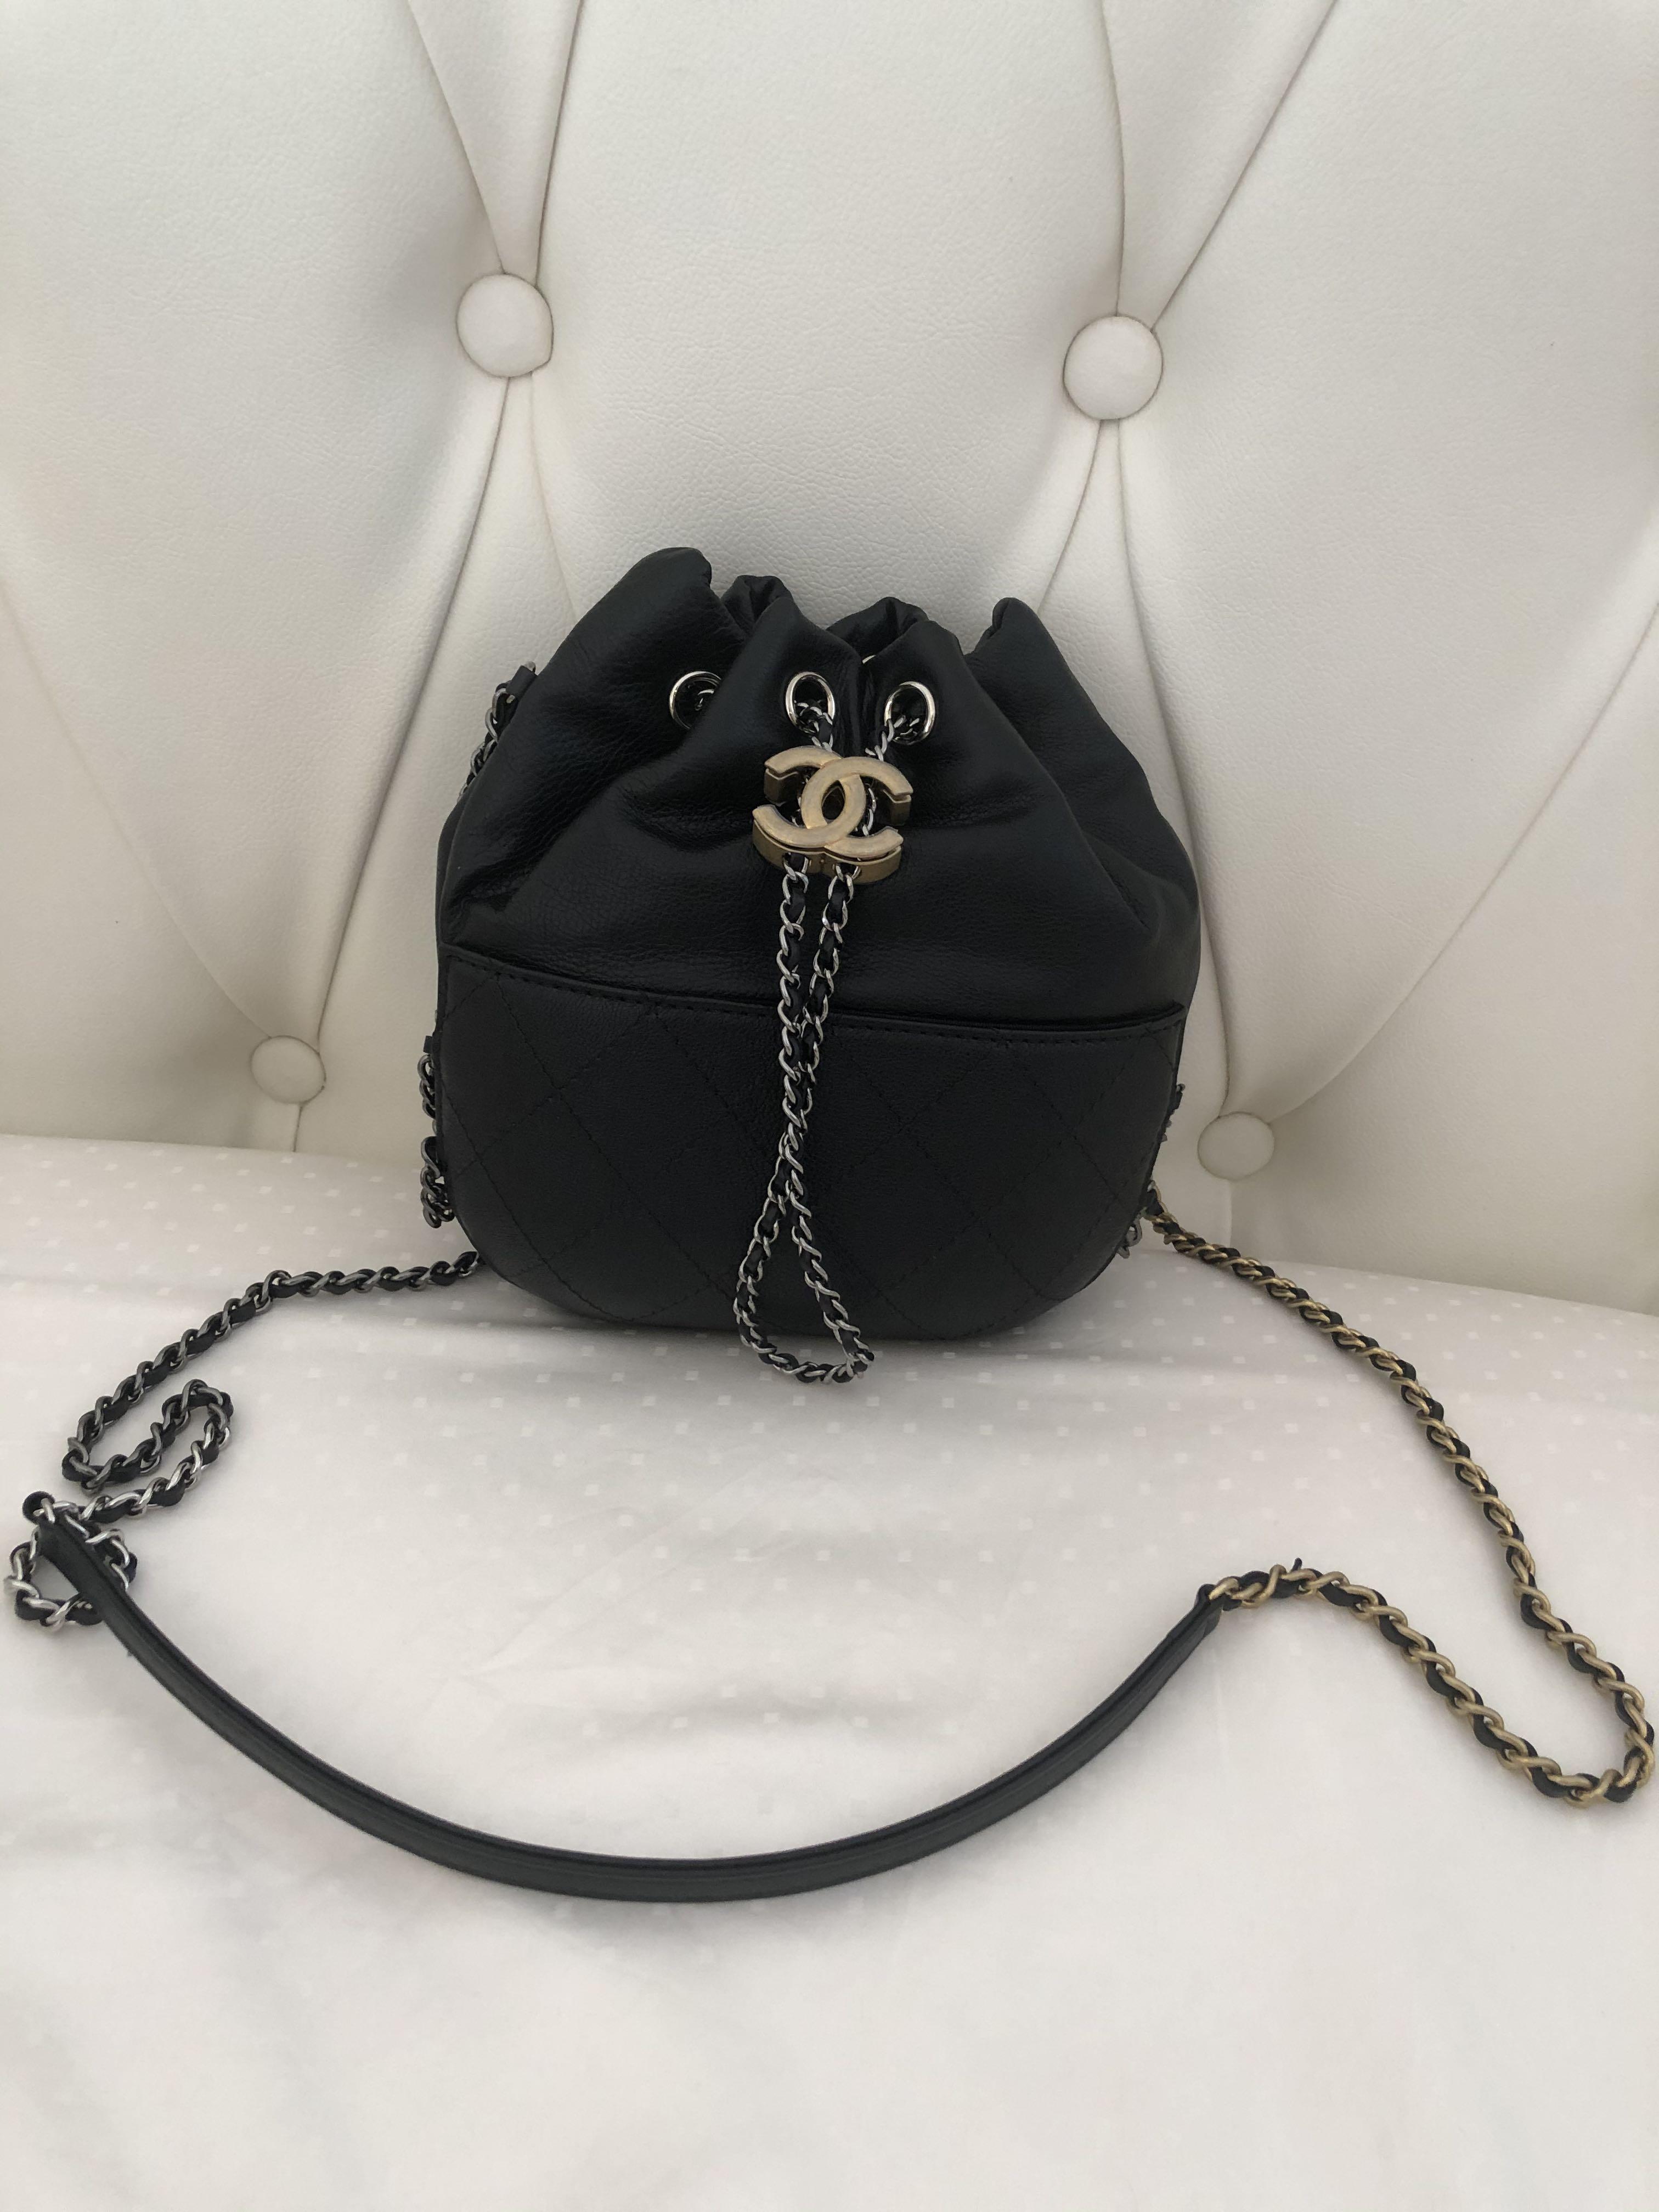 Chanel Small Gabrielle Bucket Bag